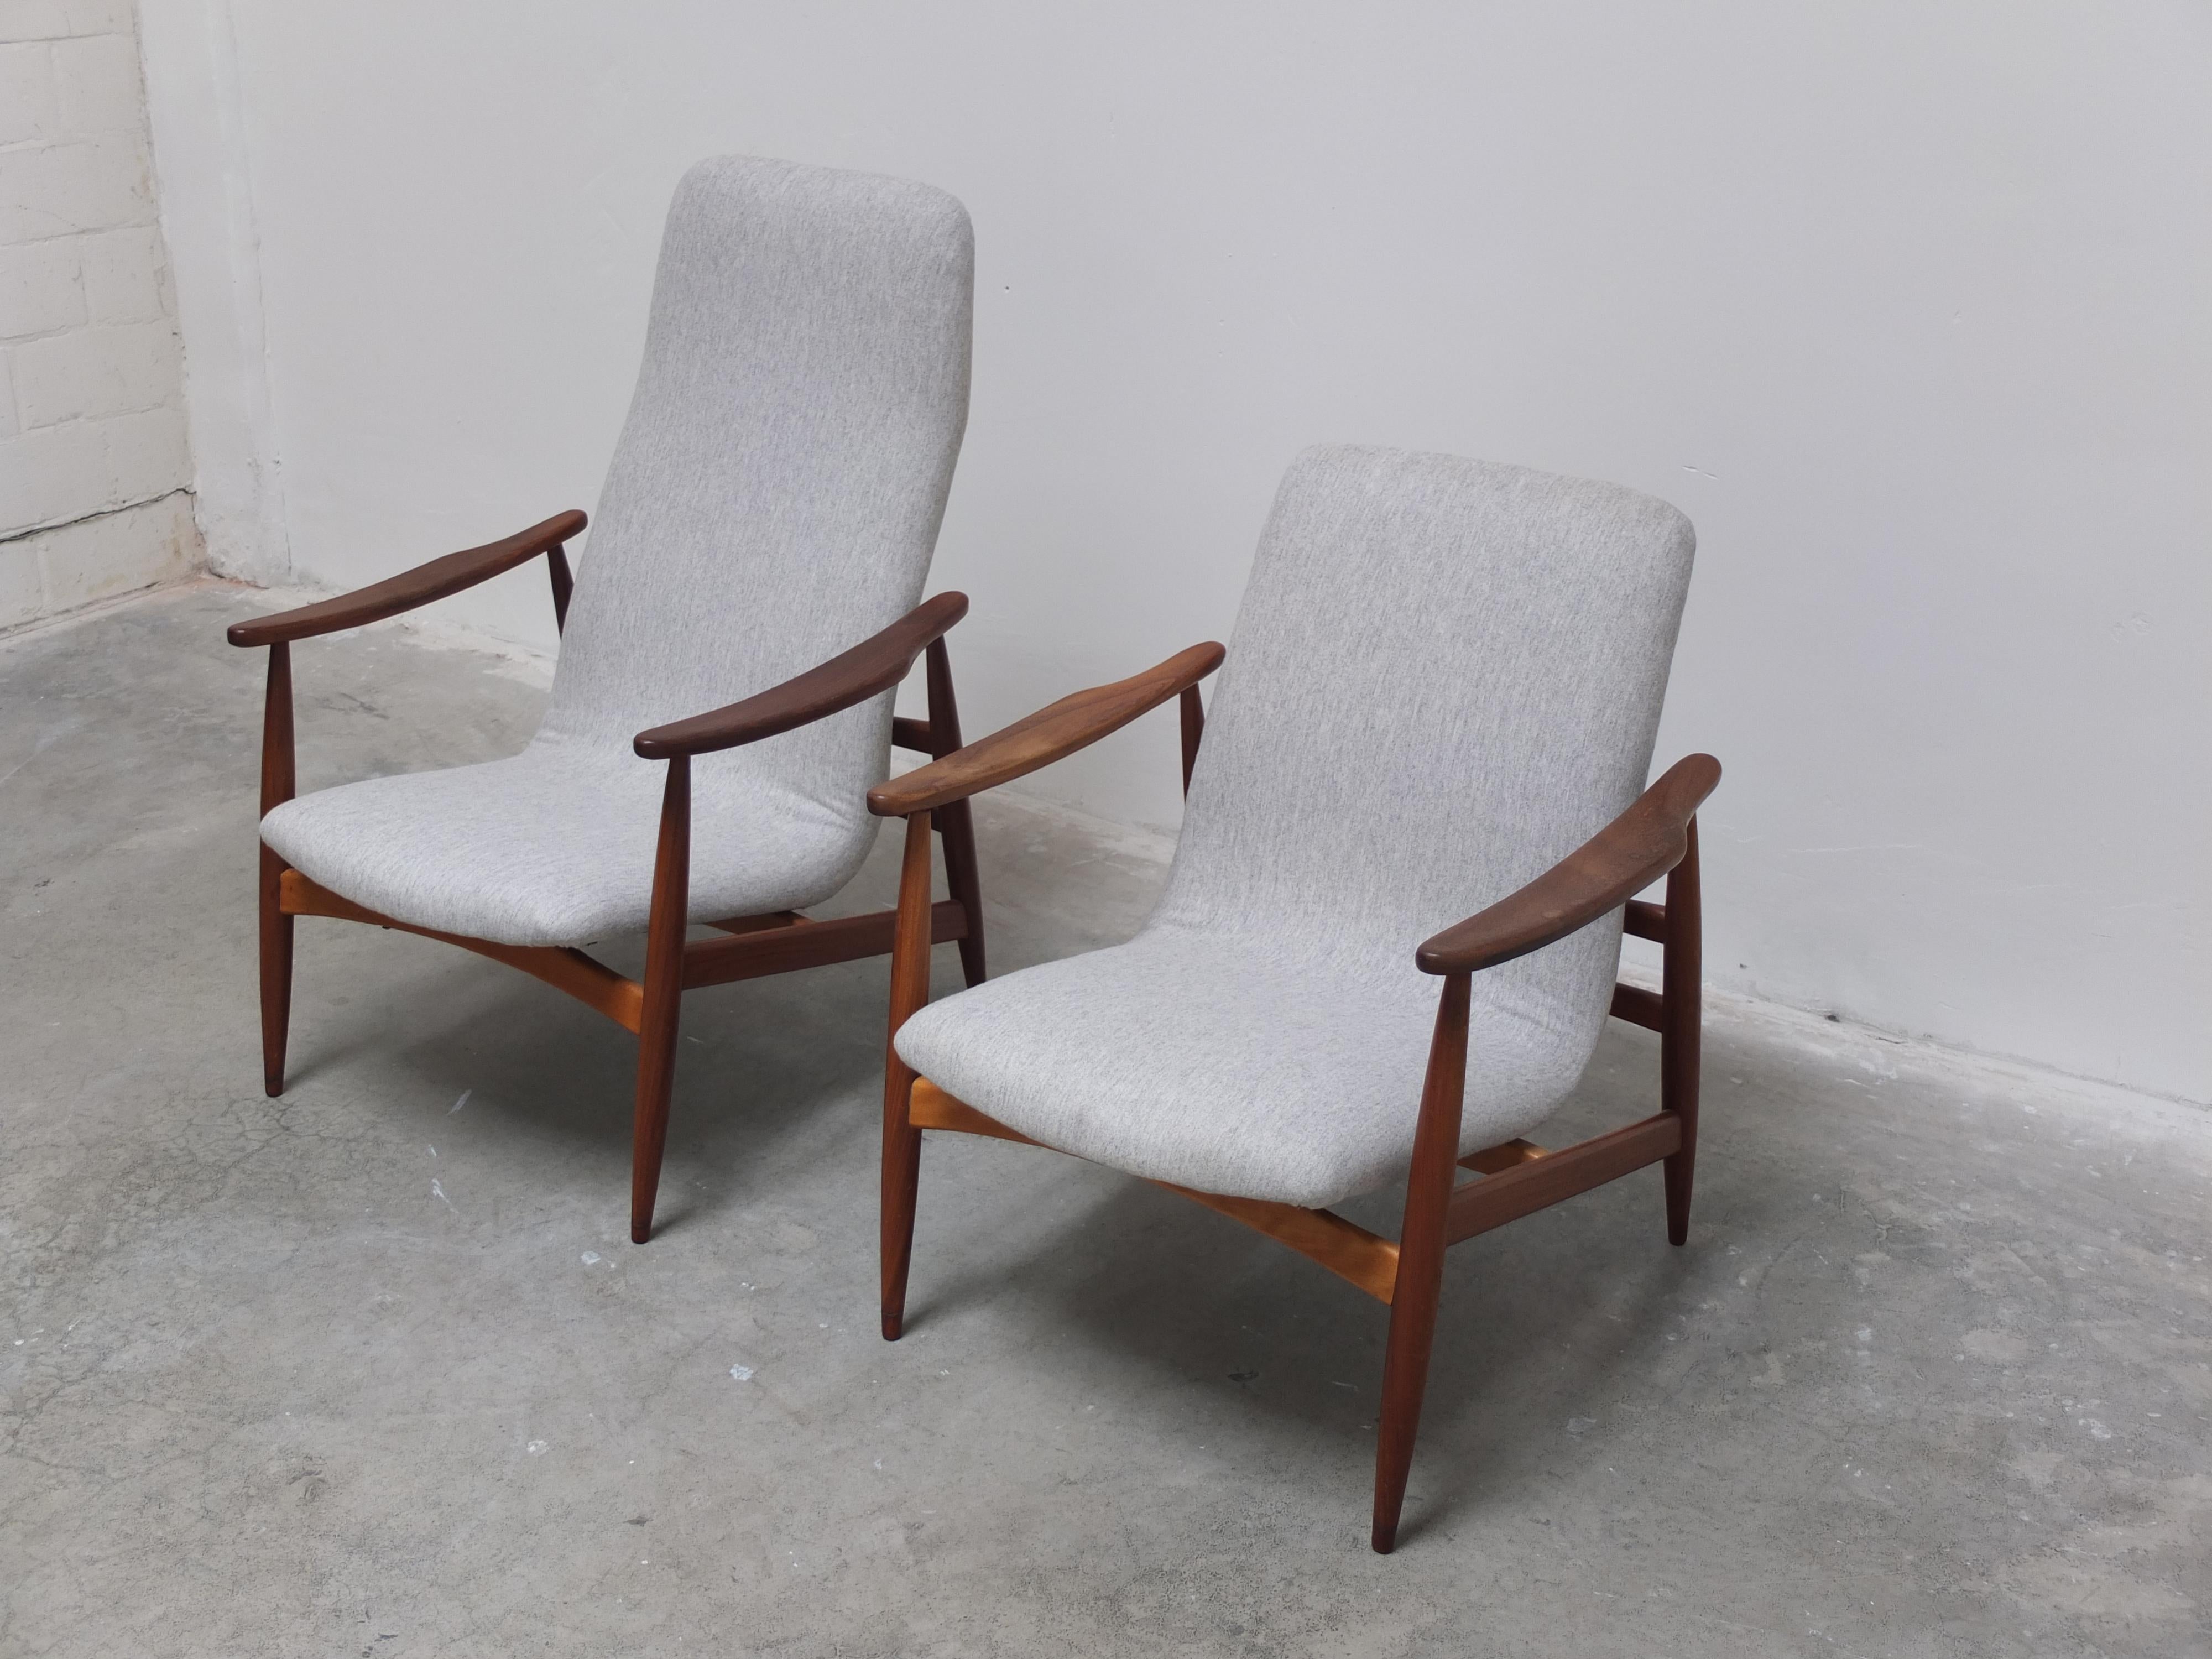 Dutch Midcentury Pair of Lounge Chairs by Louis Van Teeffelen for Wébé, 1960s